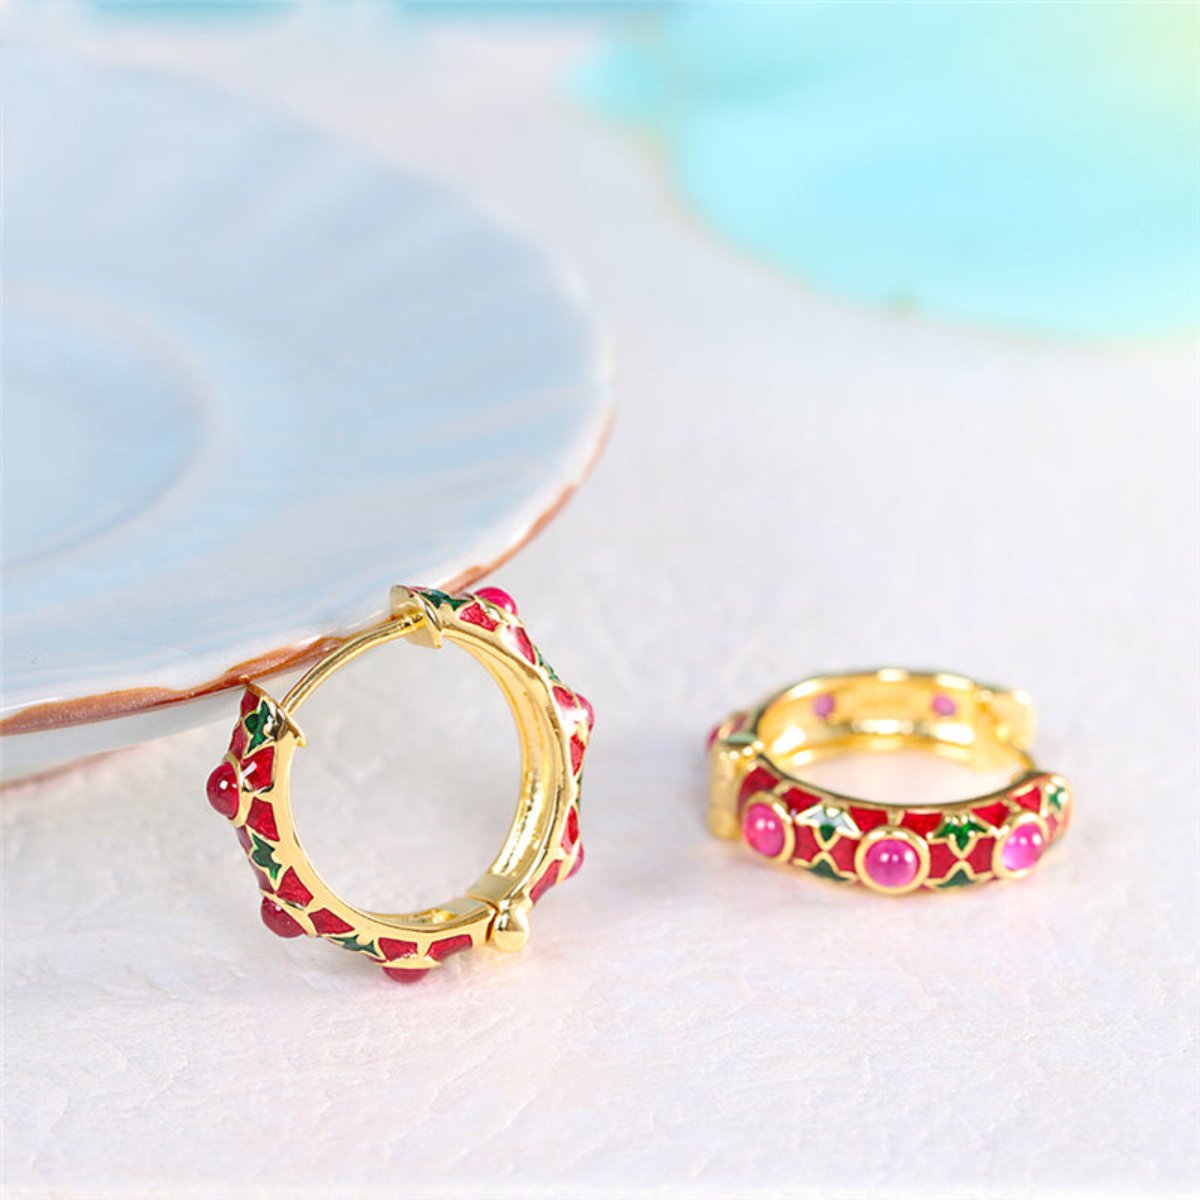 Elegant Red Corundum Gold Plated Earrings - Earrings - Pretland | Spiritual Crystals & Jewelry